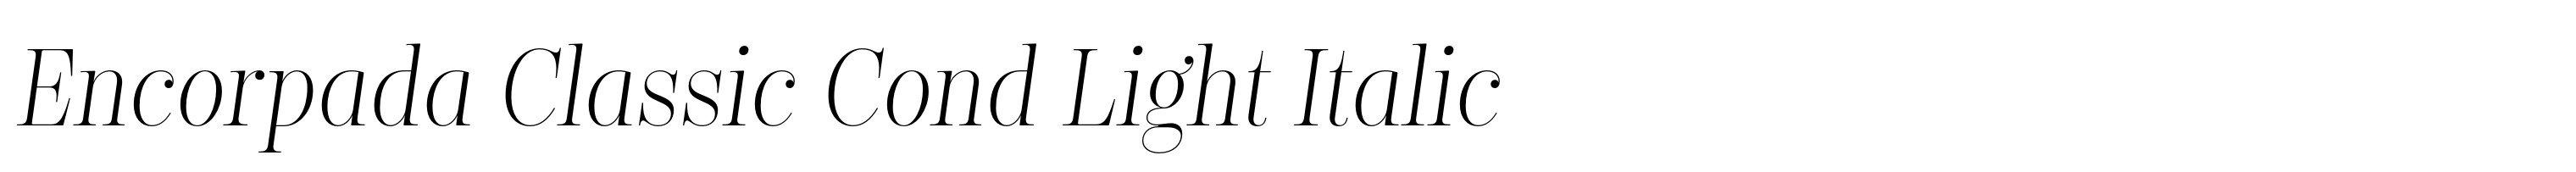 Encorpada Classic Cond Light Italic